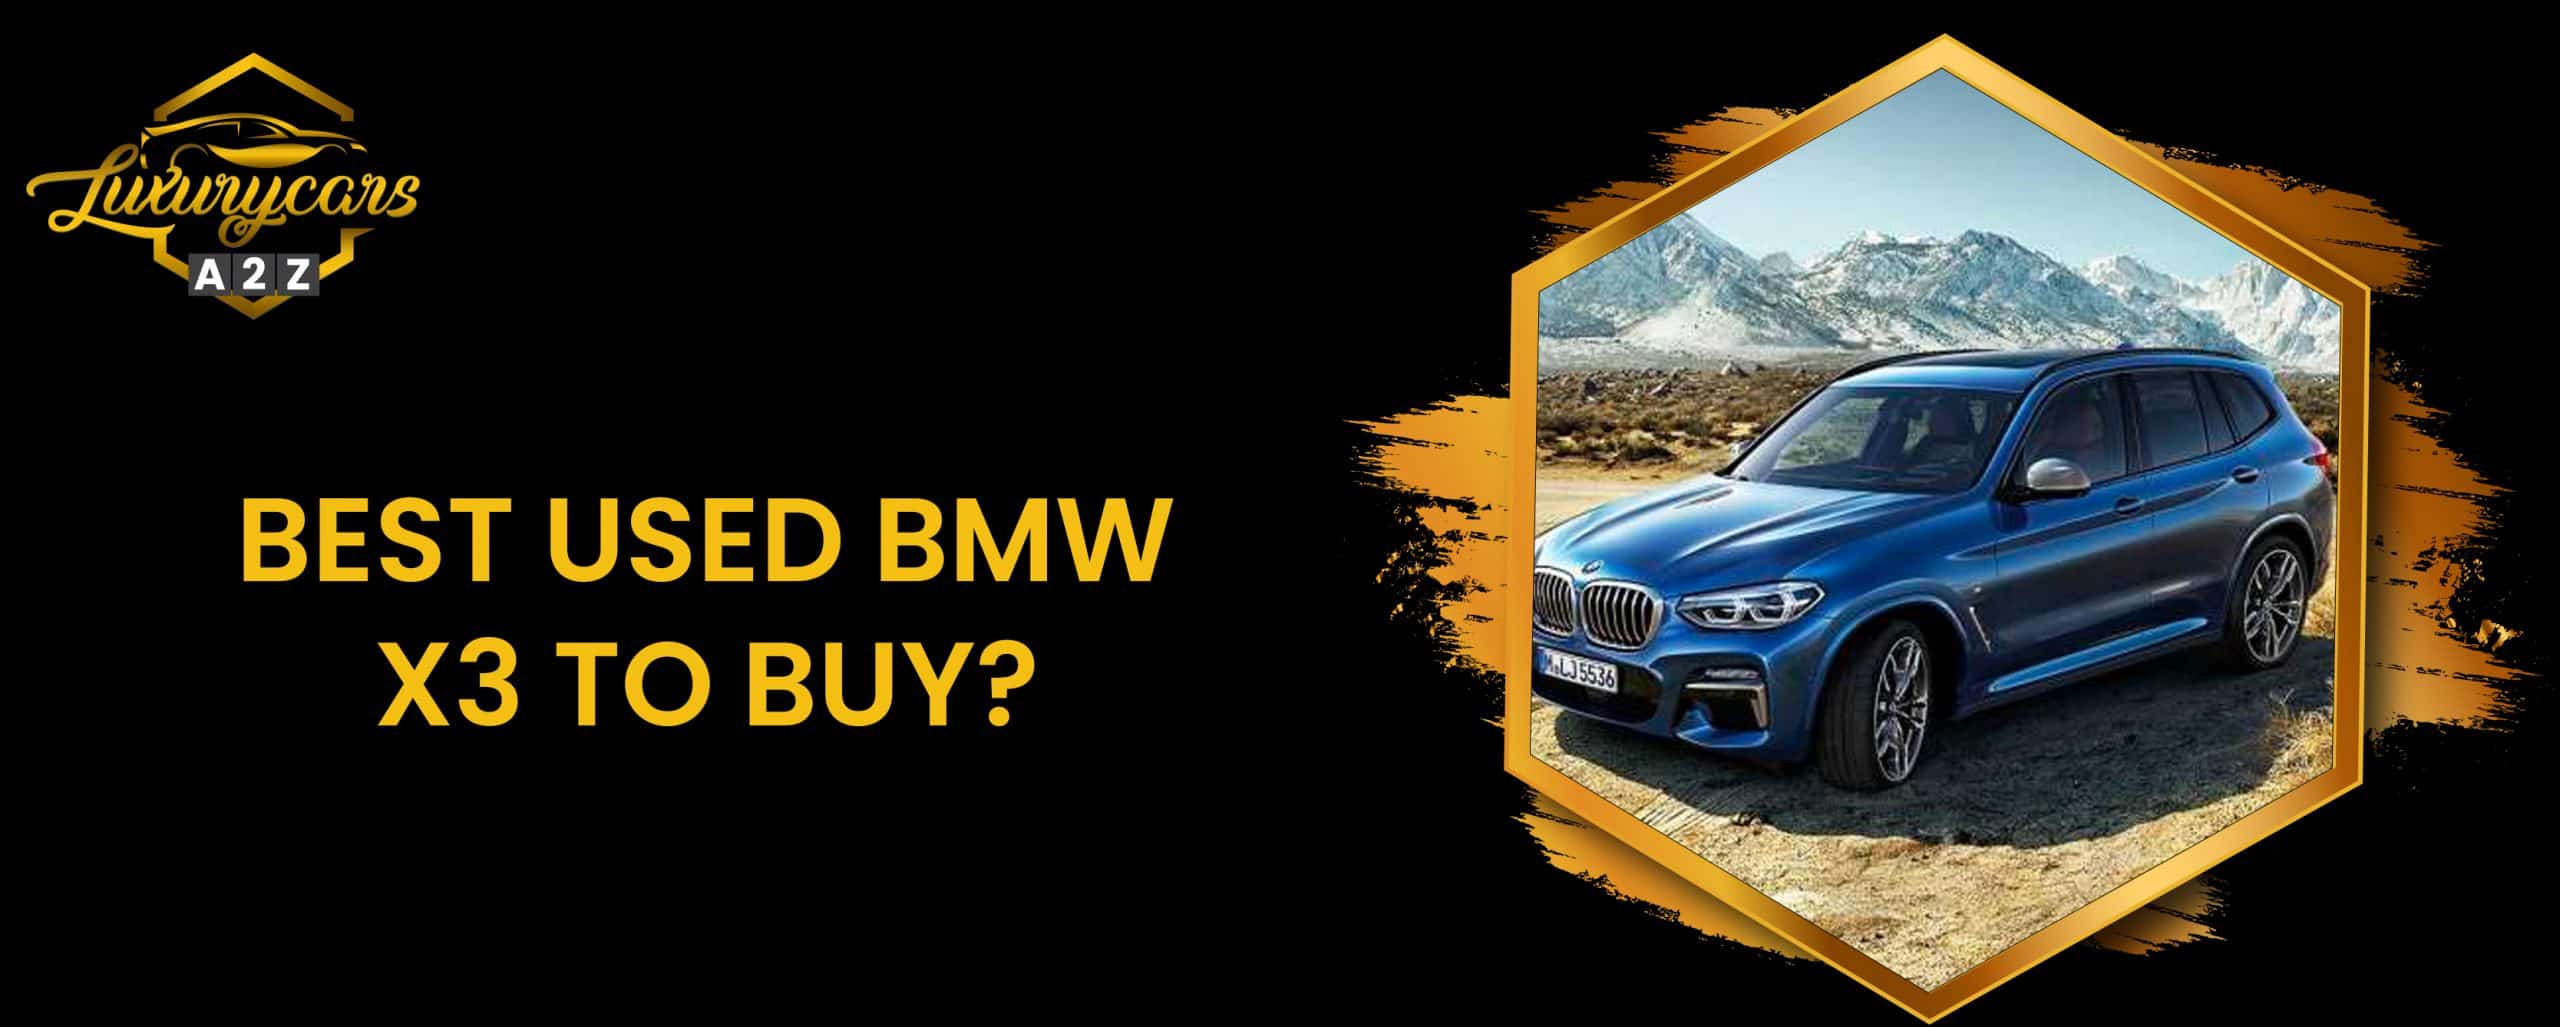 Meilleure BMW X3 d'occasion à acheter